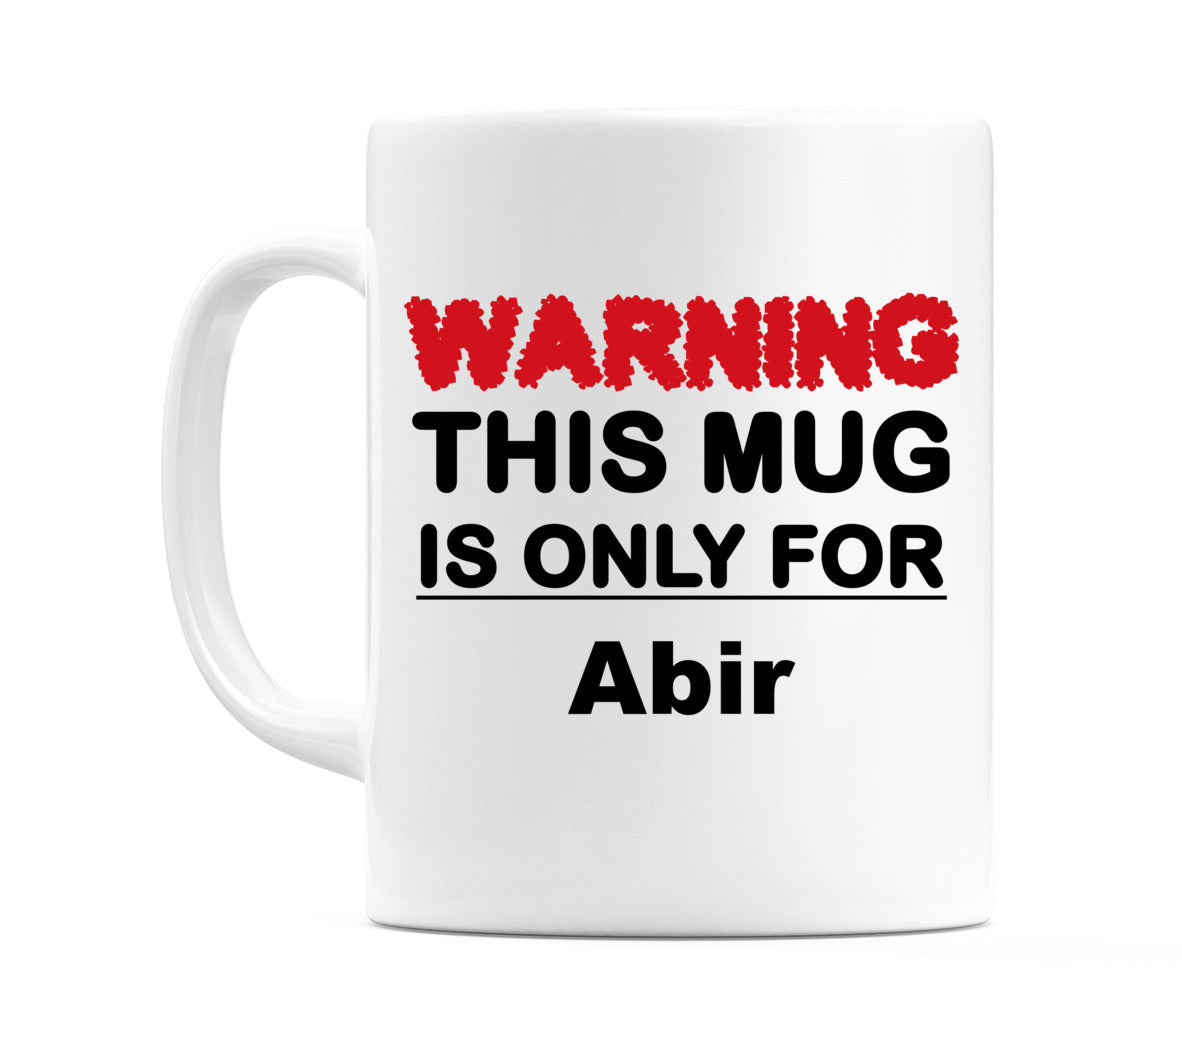 Warning This Mug is ONLY for Abir Mug